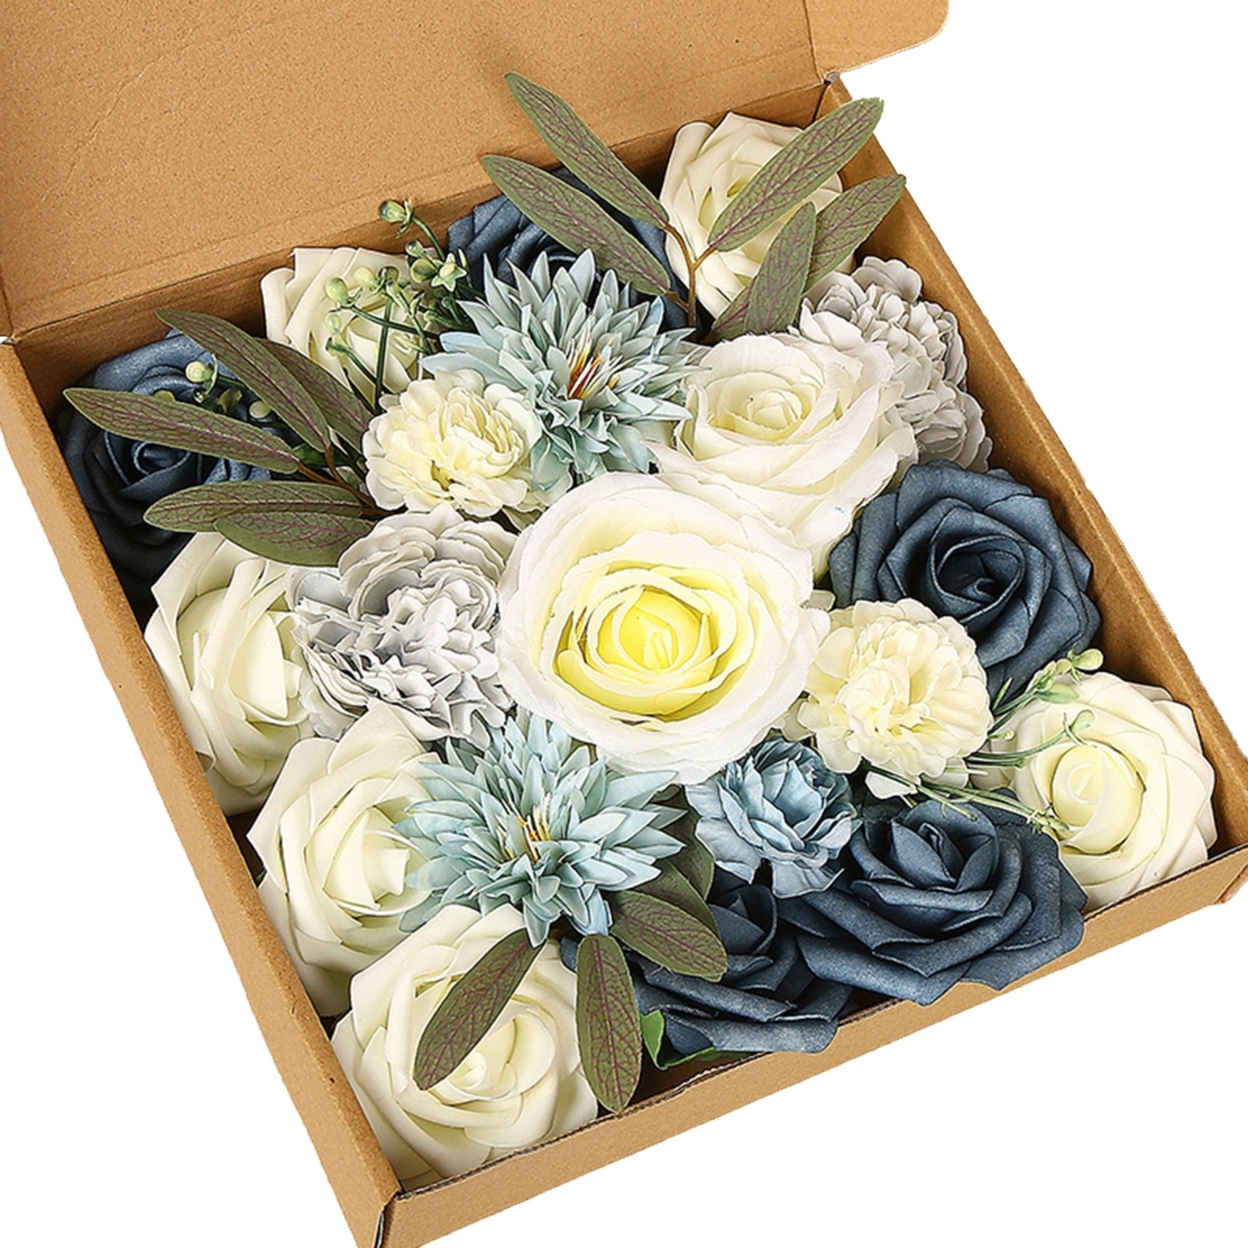 1 Box Beautiful Realistic Artificial Flower Faux Silk Flower Vivid Fine Texture Simulation Rose Wedding Accessories - blue